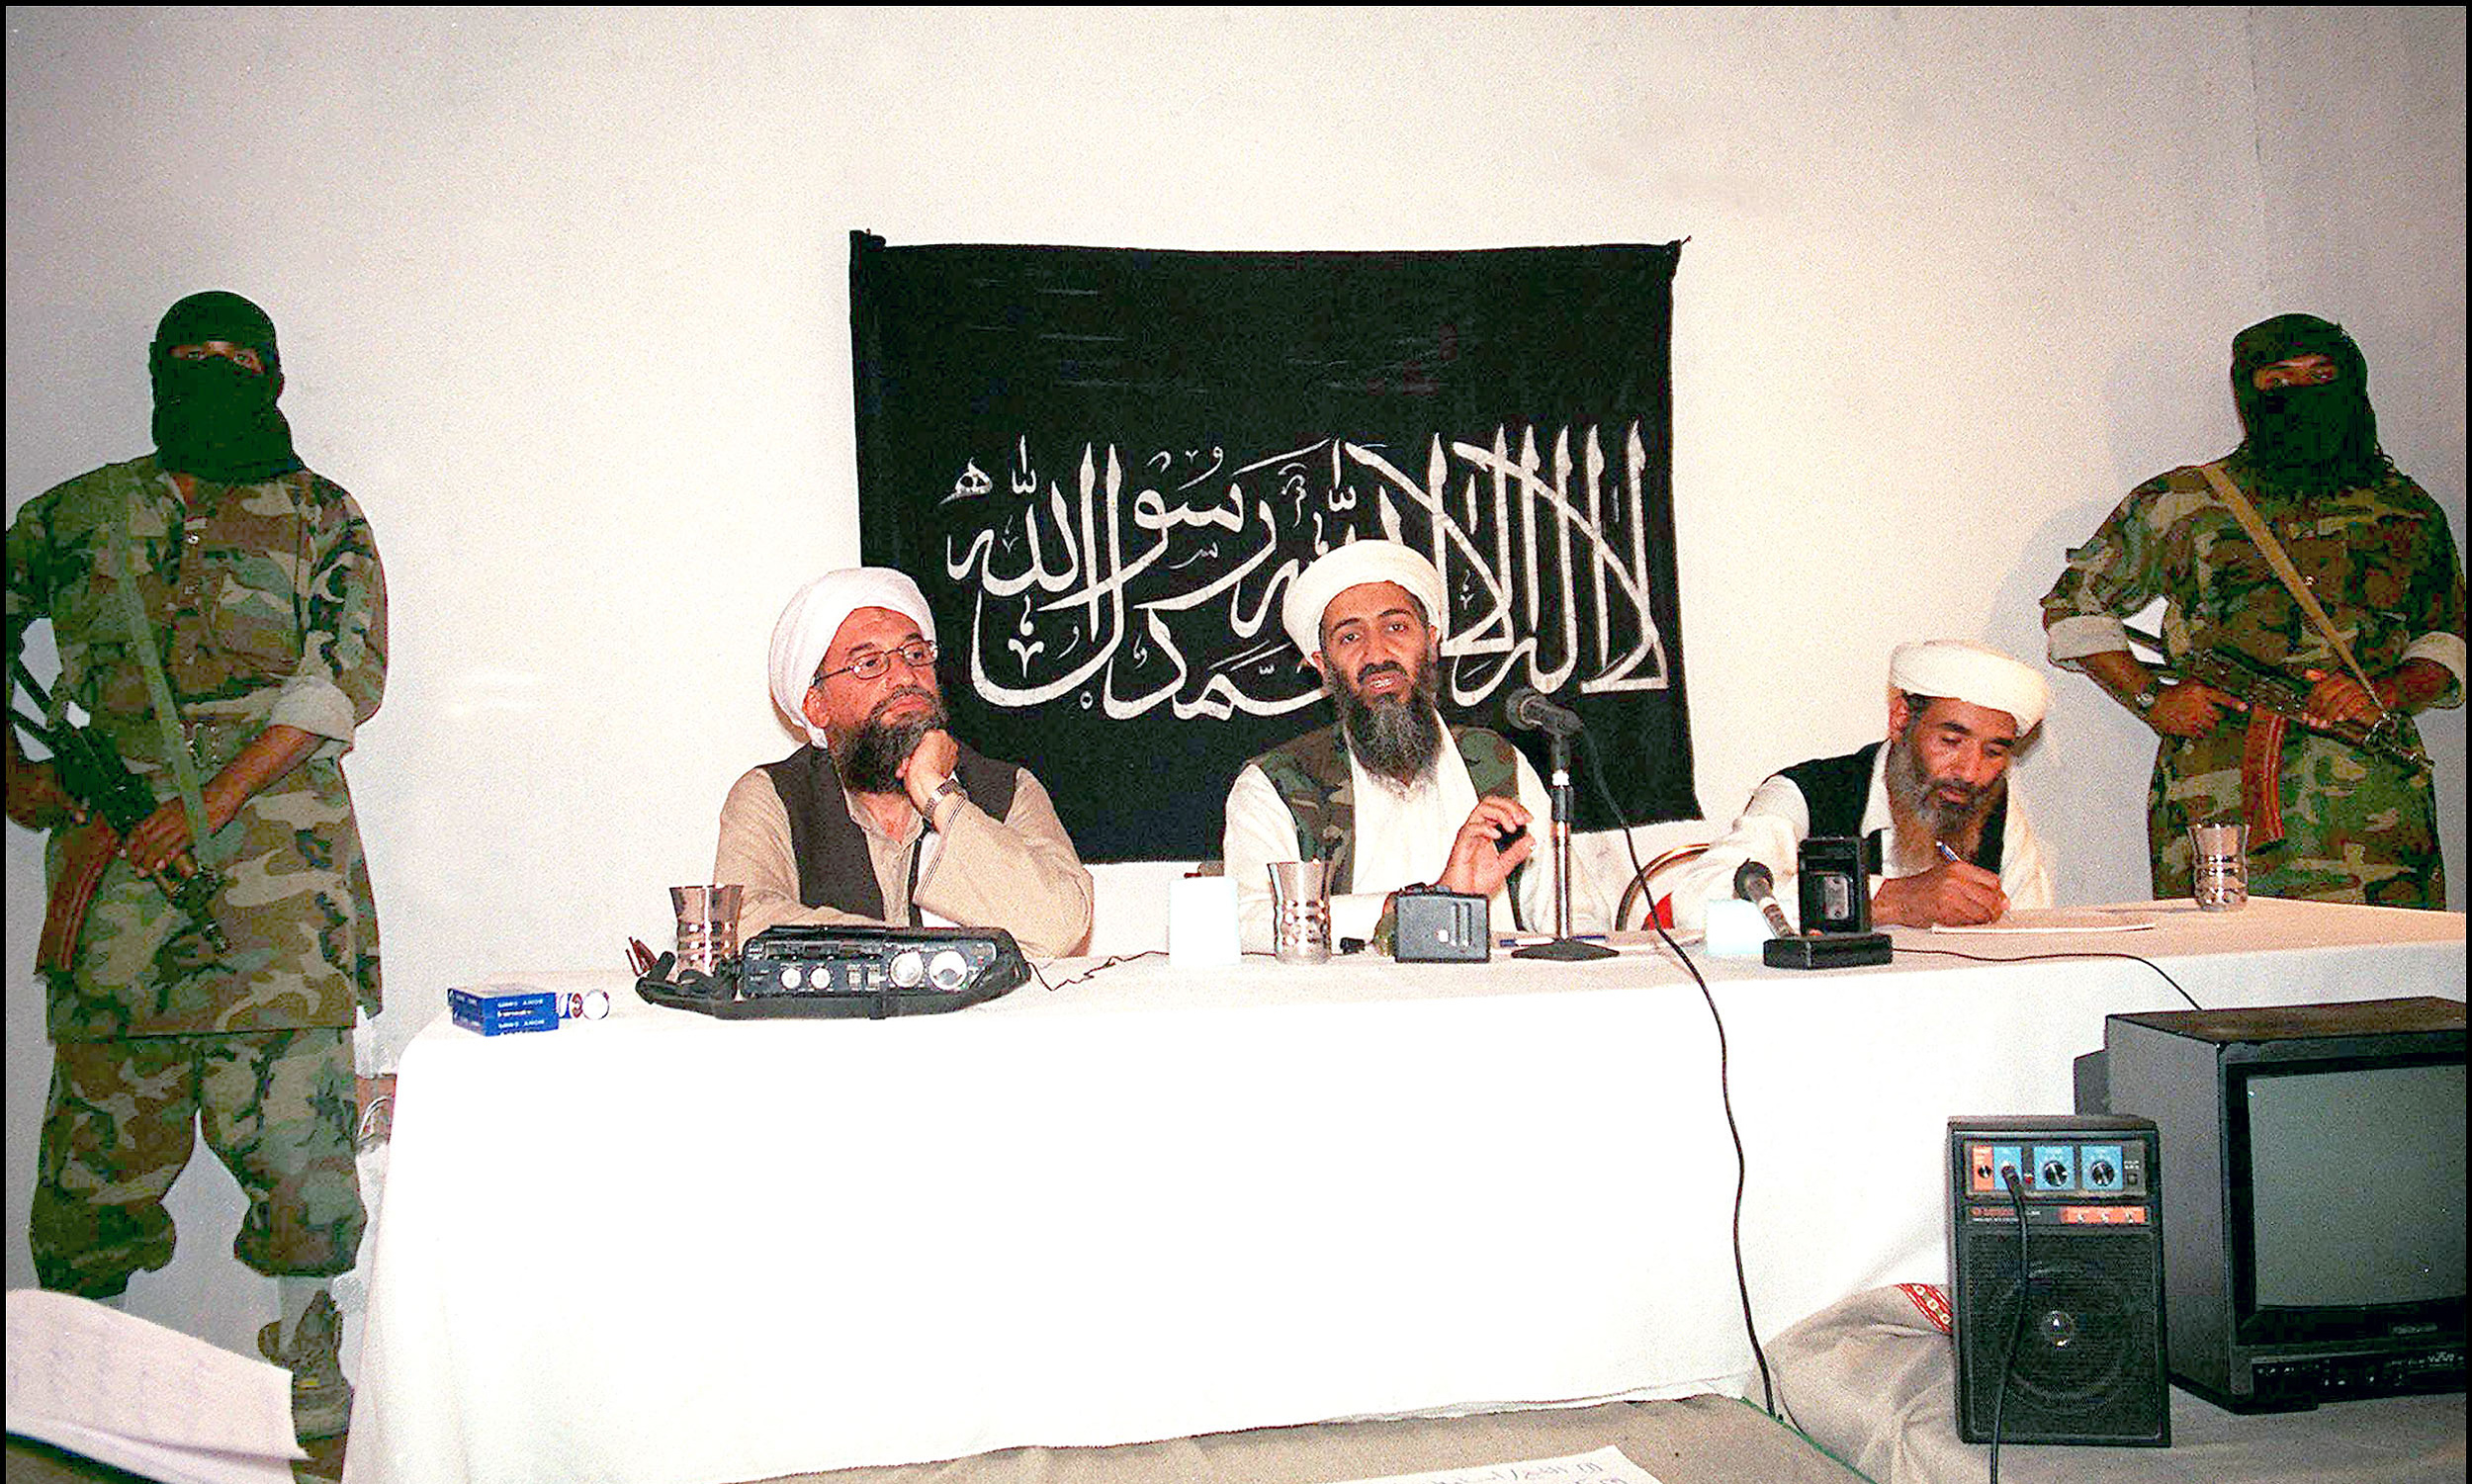 Глава аль каиды. Усама Бен Ладен Аль Каида. Усама Бен Ладен террорист. Усама Бен Ладен Аль Каида 2001.